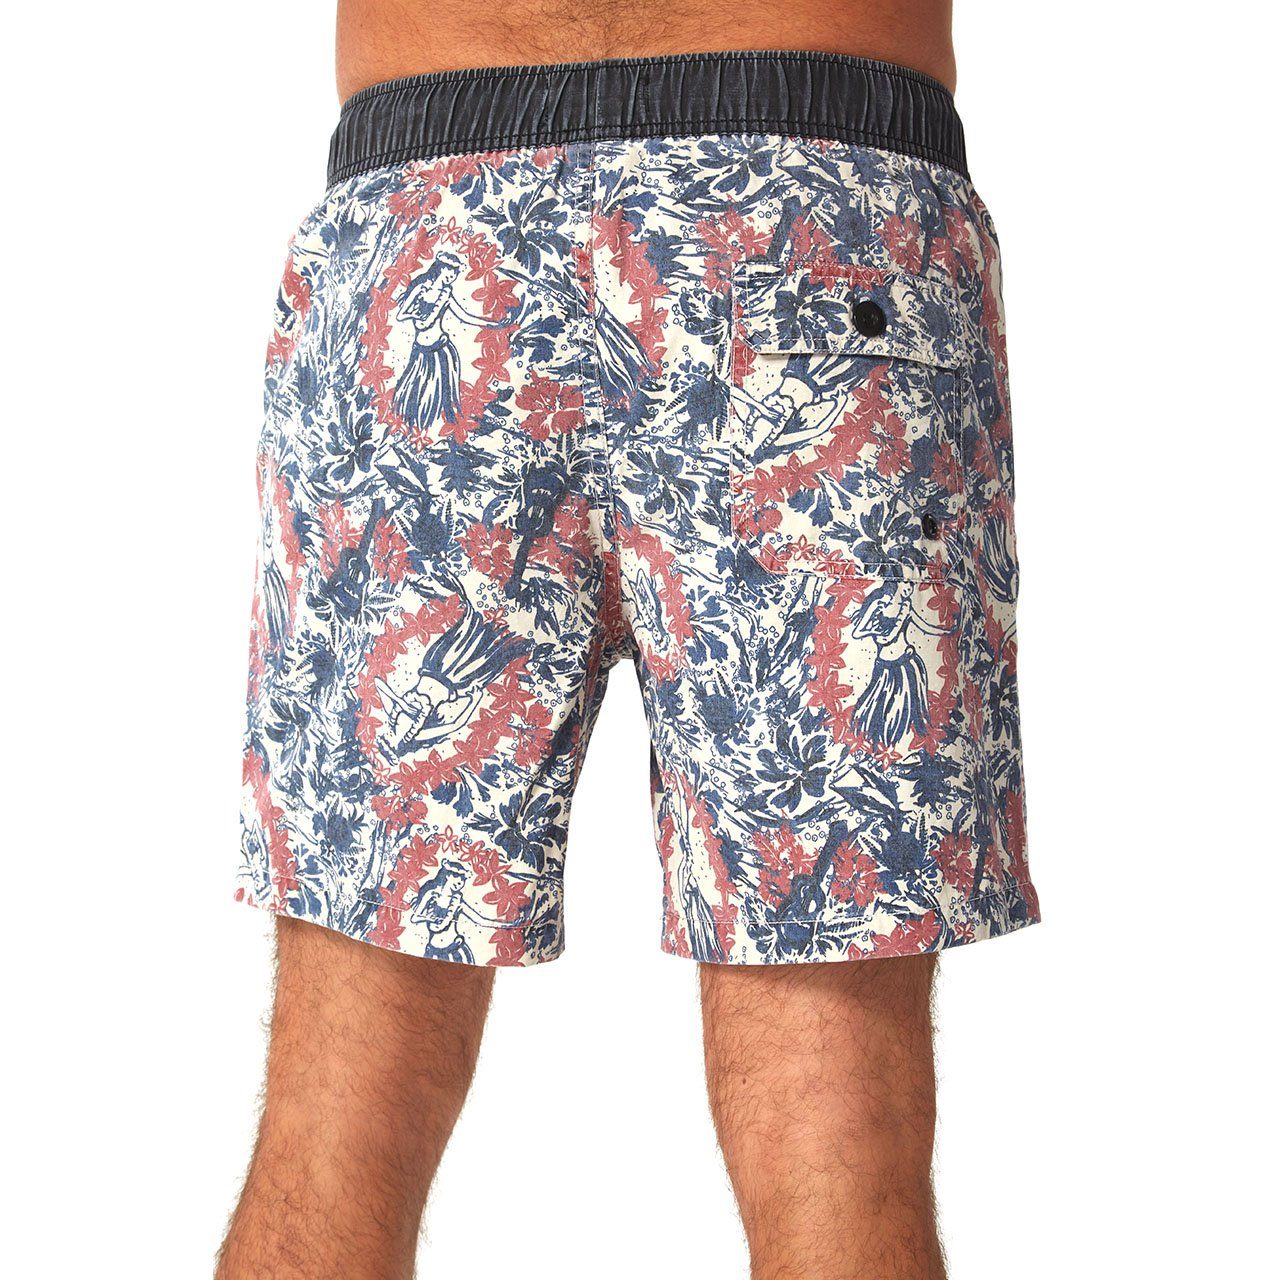 PX Clothing Men's Jake Swim Trunk - Men - Apparel - Swimwear - Trunks - Benn~Burry